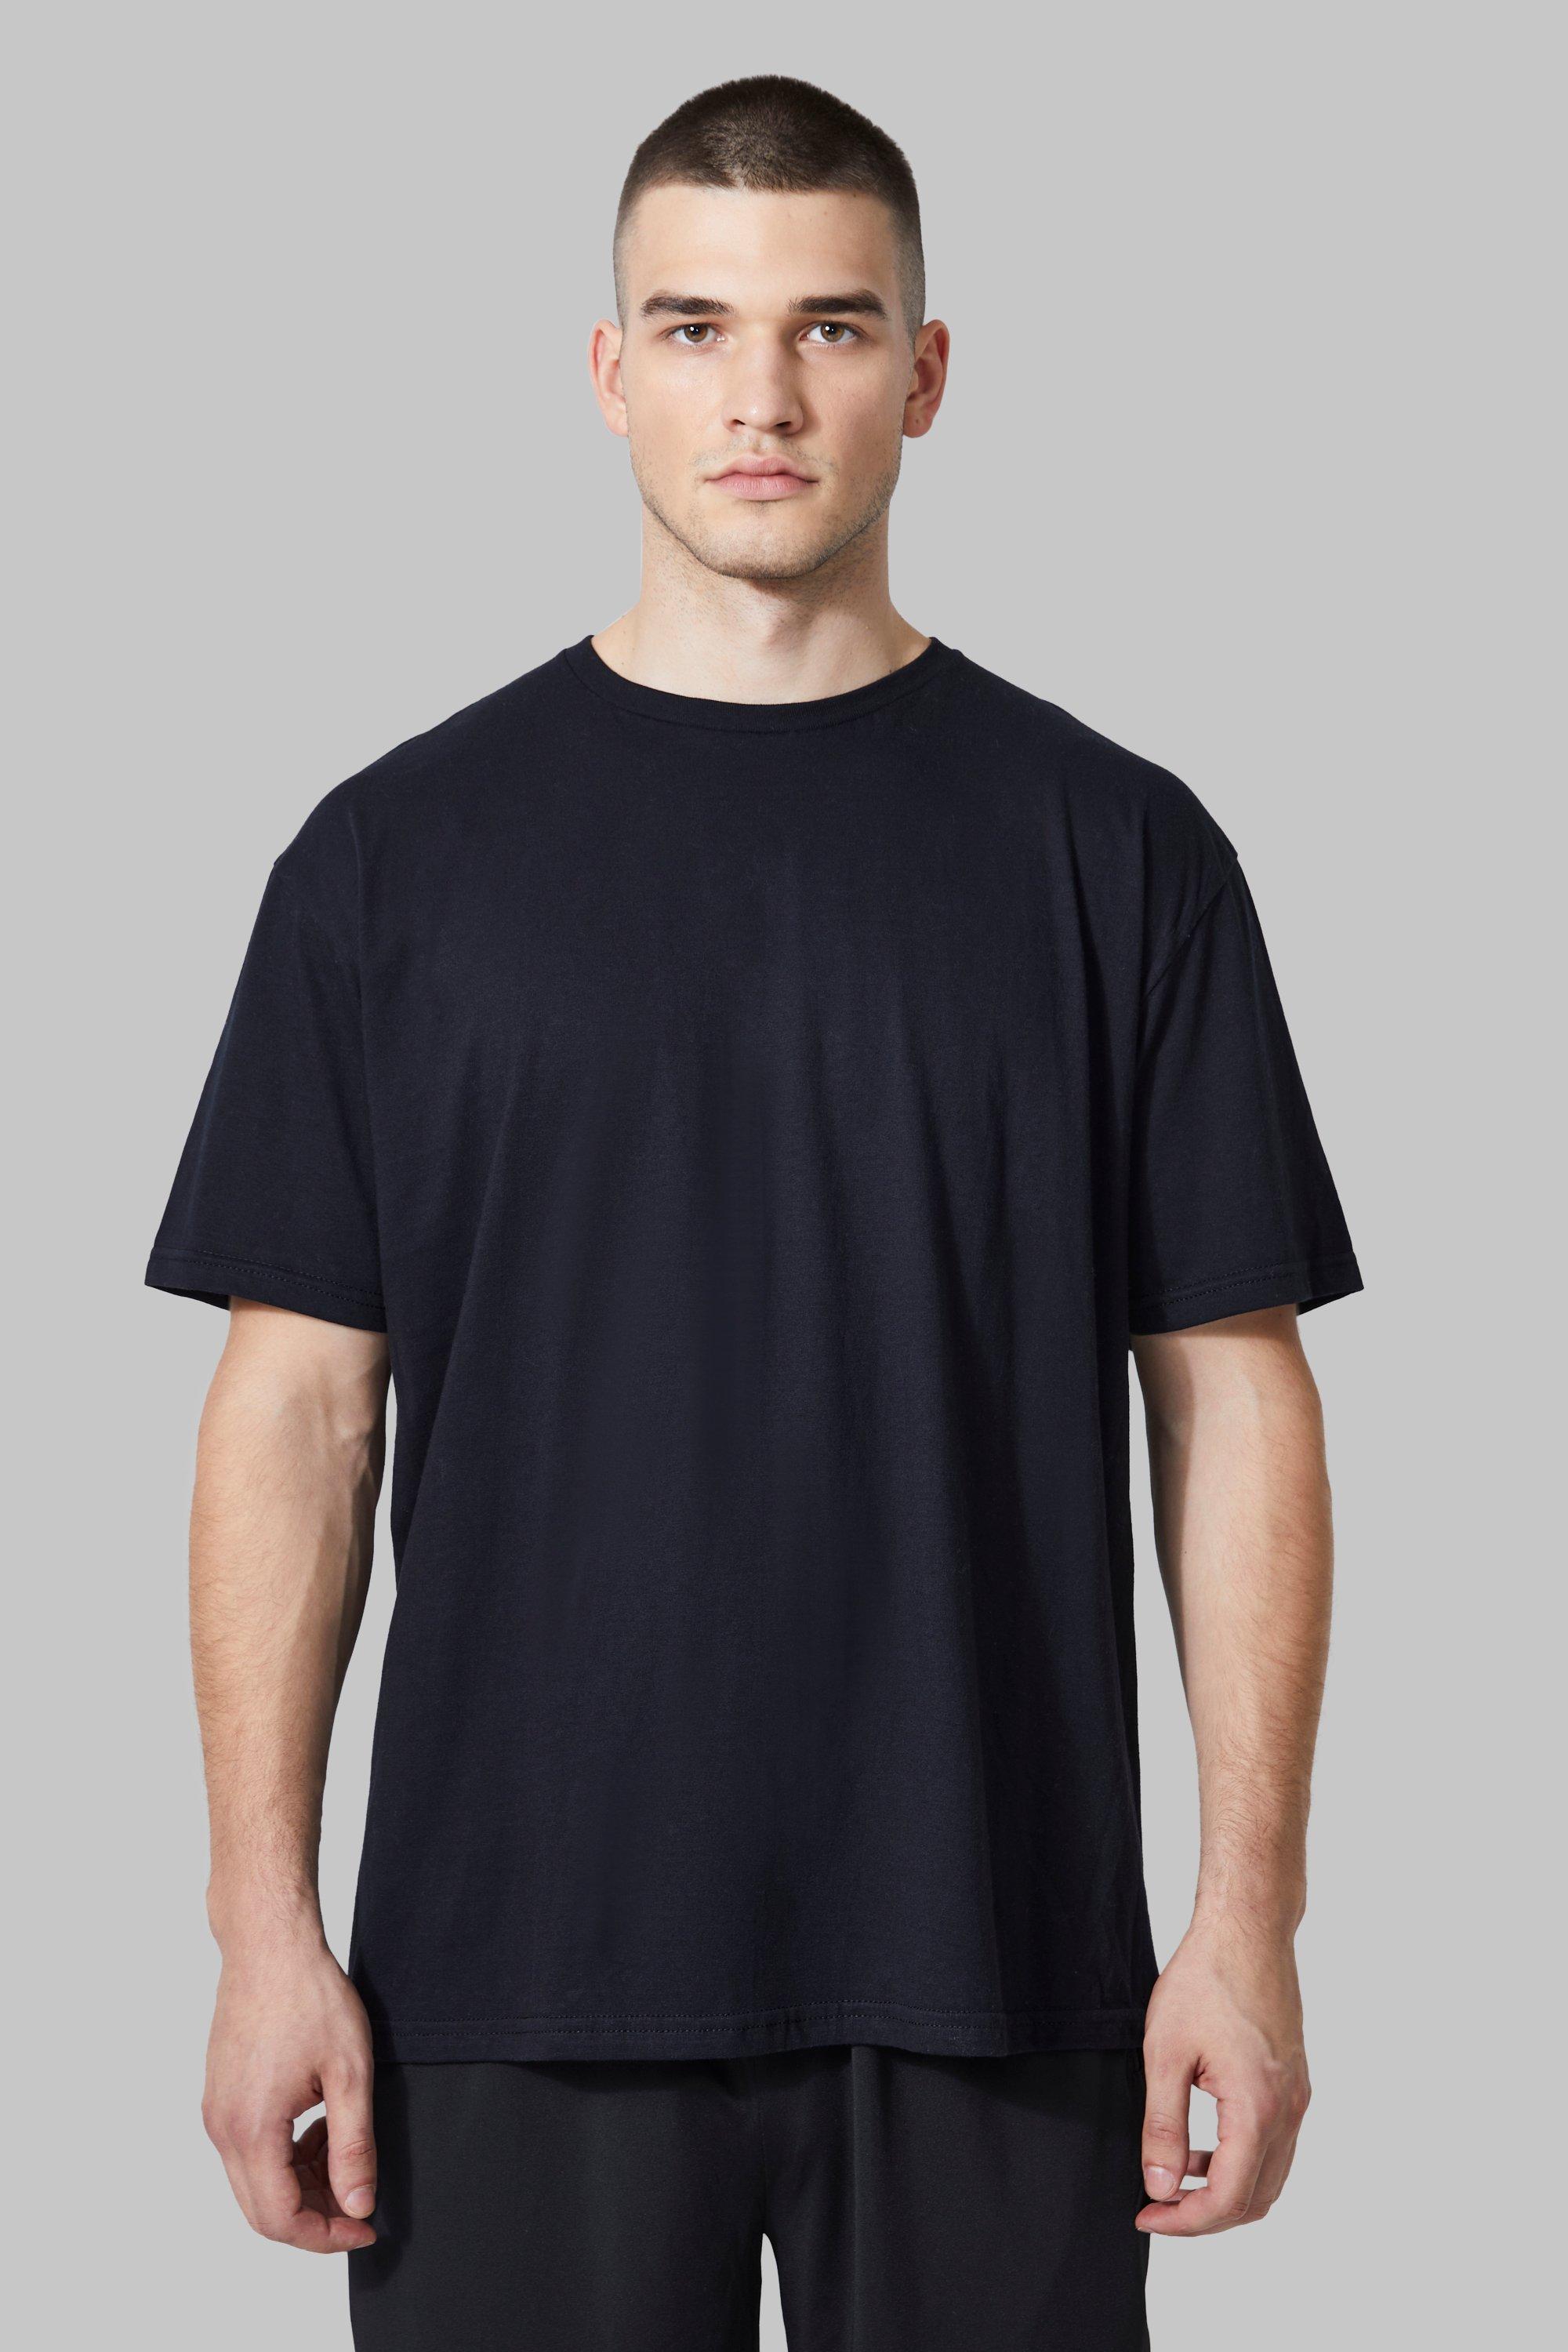 Men's T-shirts & Tops - Long, Oversized & More